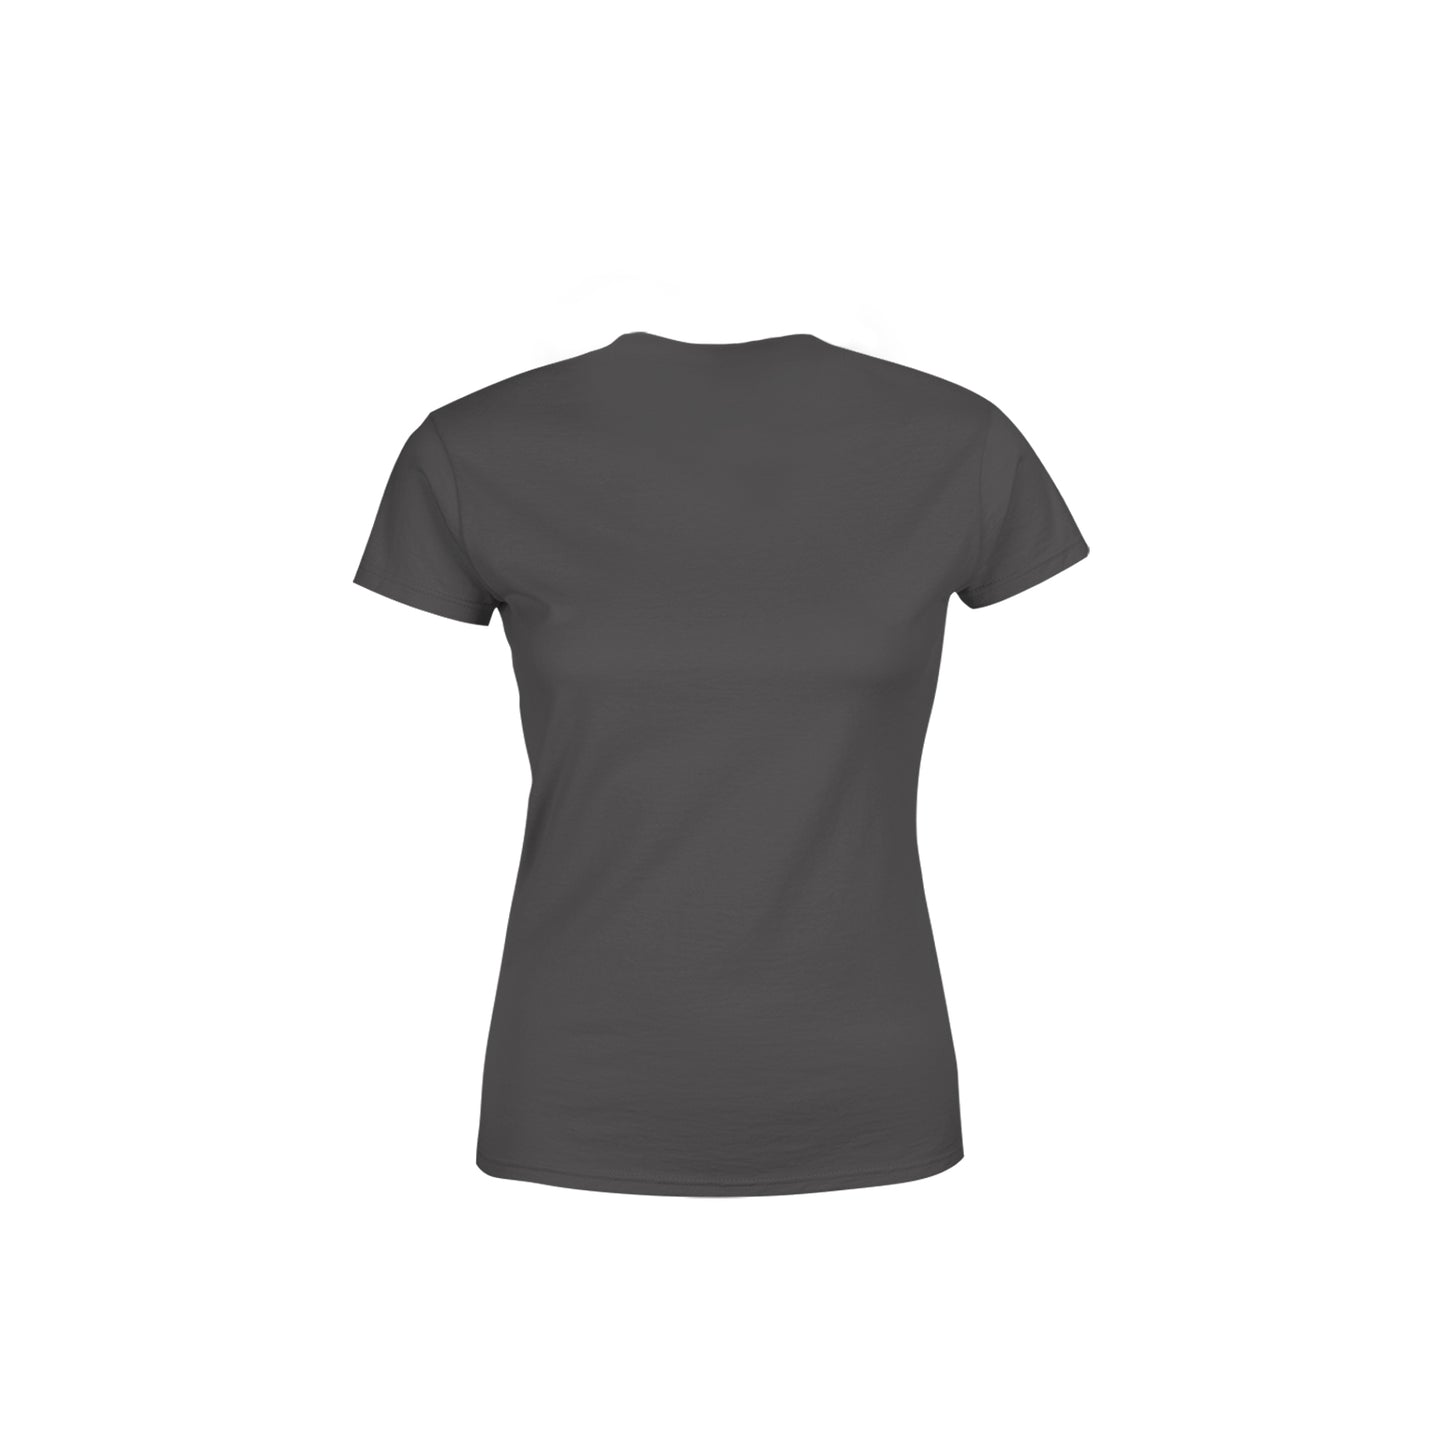 38 Number Women's T-Shirt (Charcoal Grey)